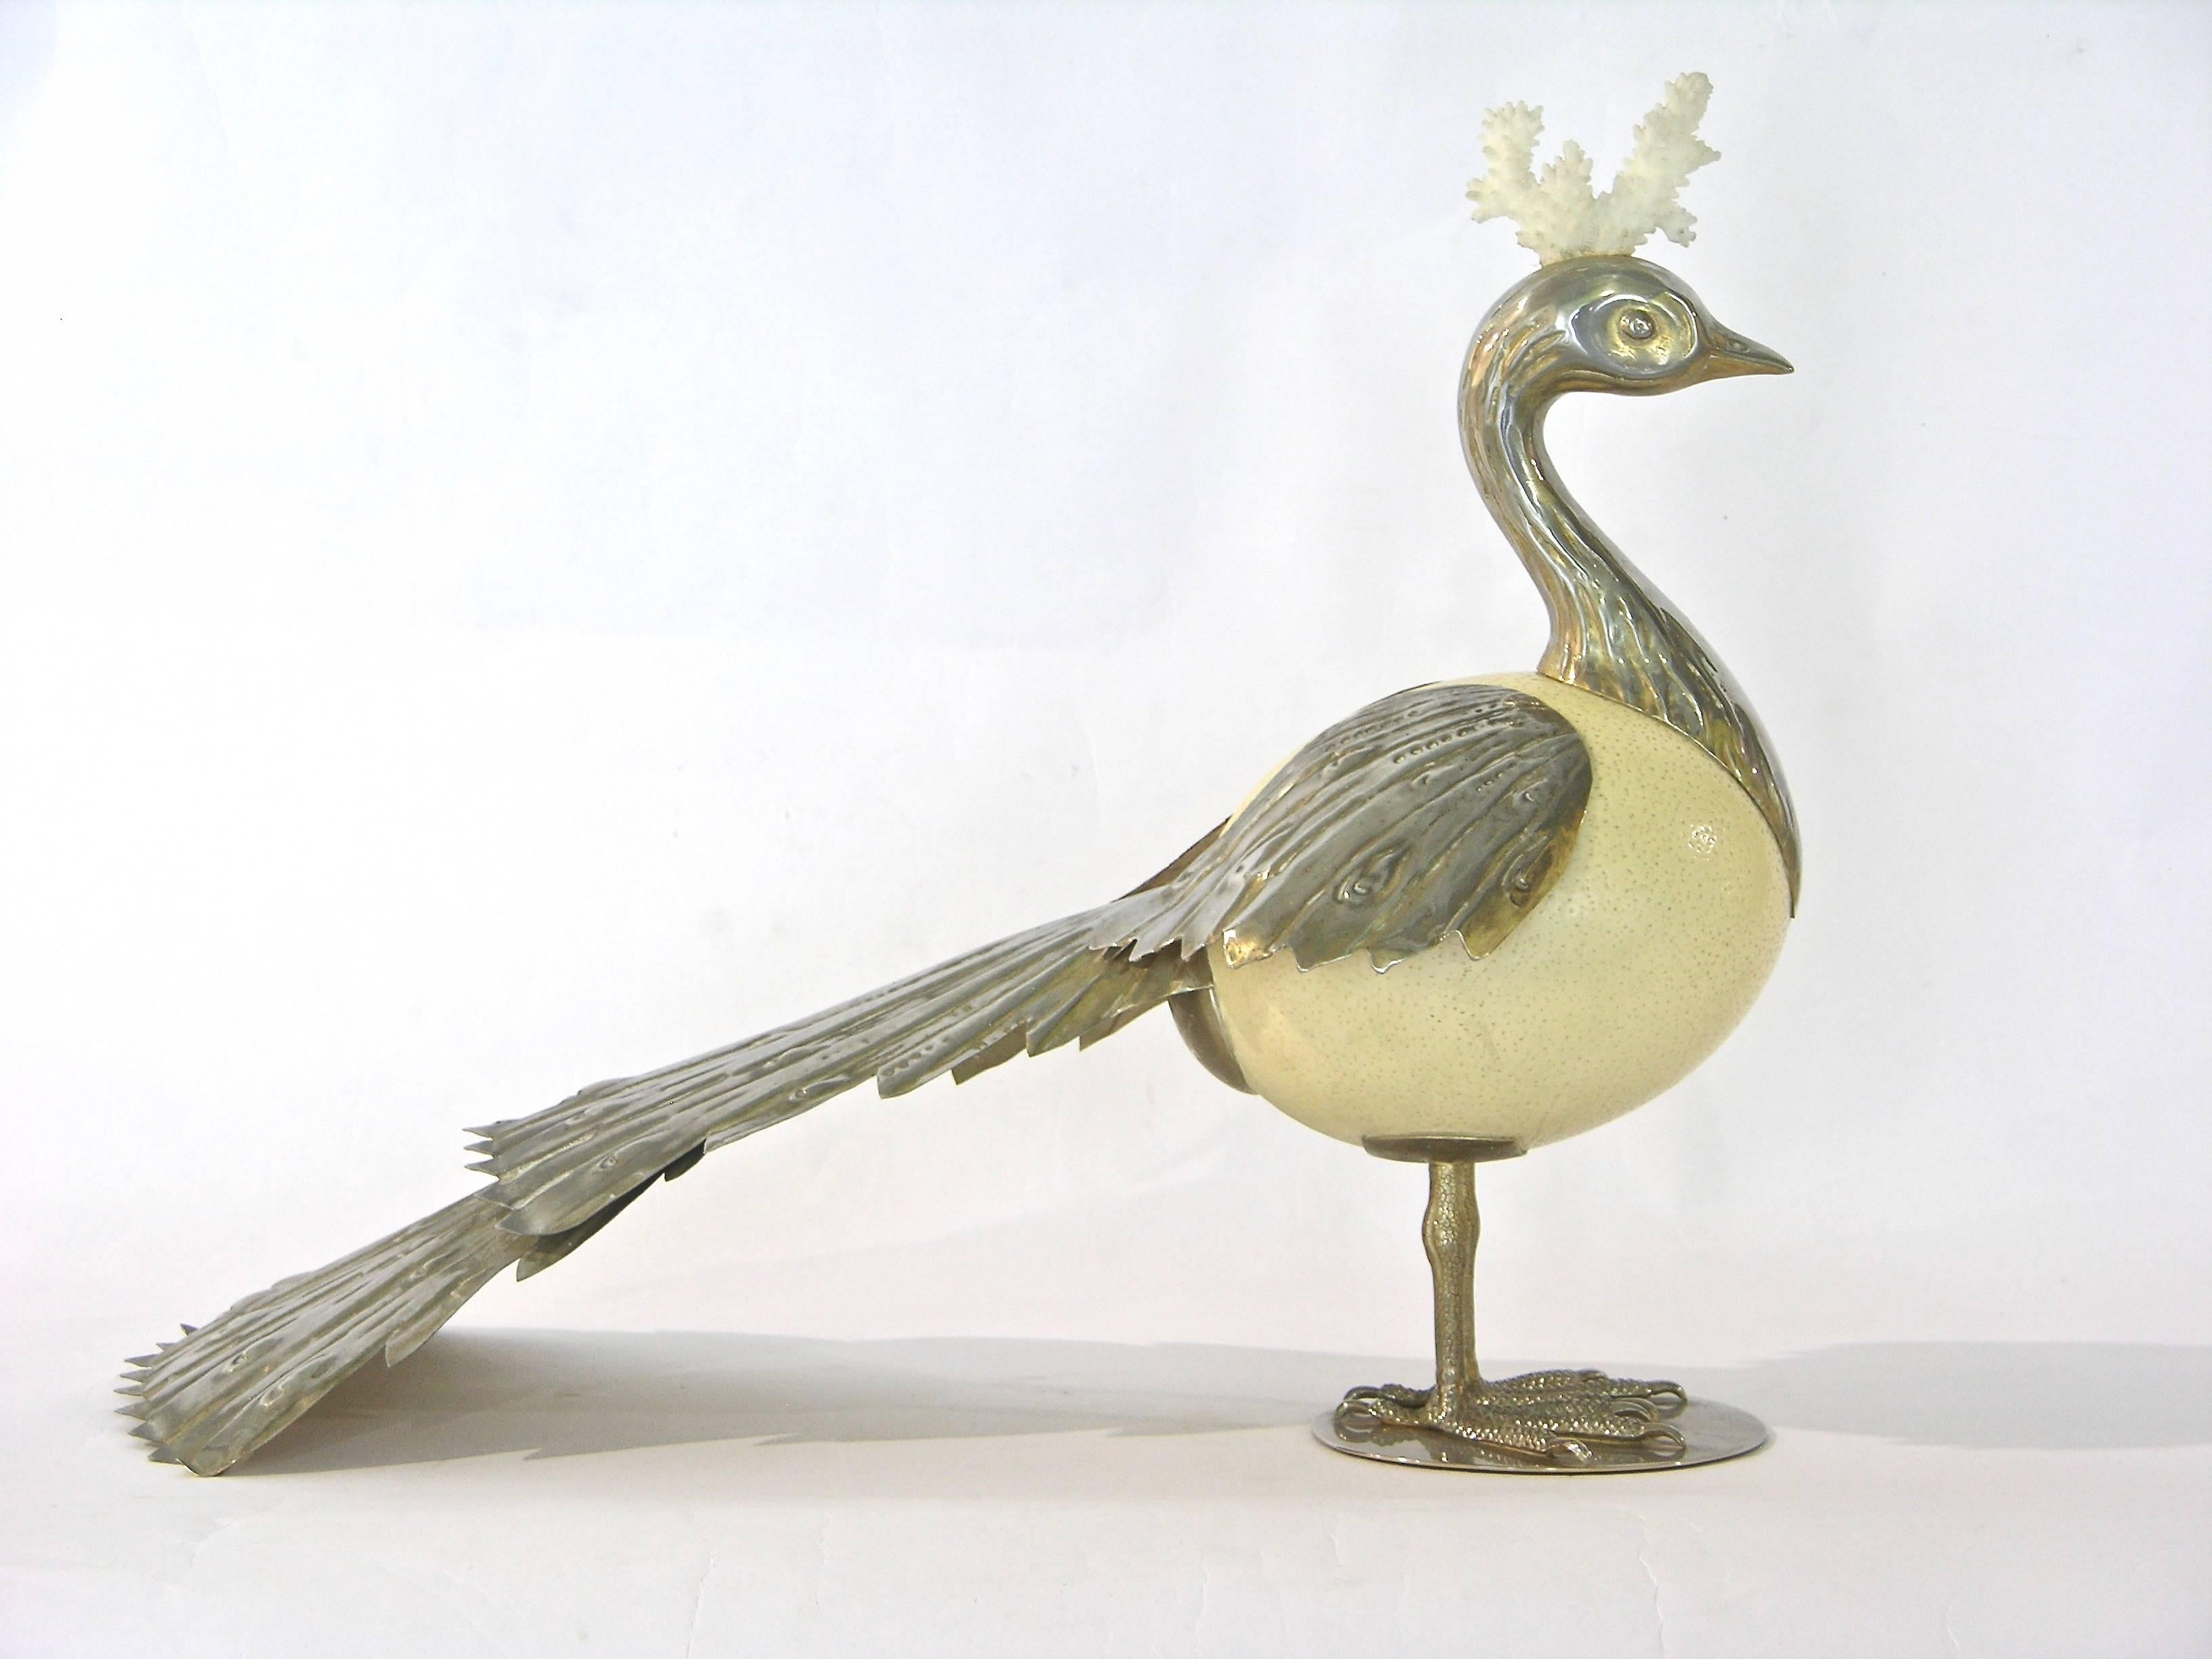 Antonio Pavia 1970s Italian Silver Plated Cream Bird Sculpture with White Crest For Sale 1